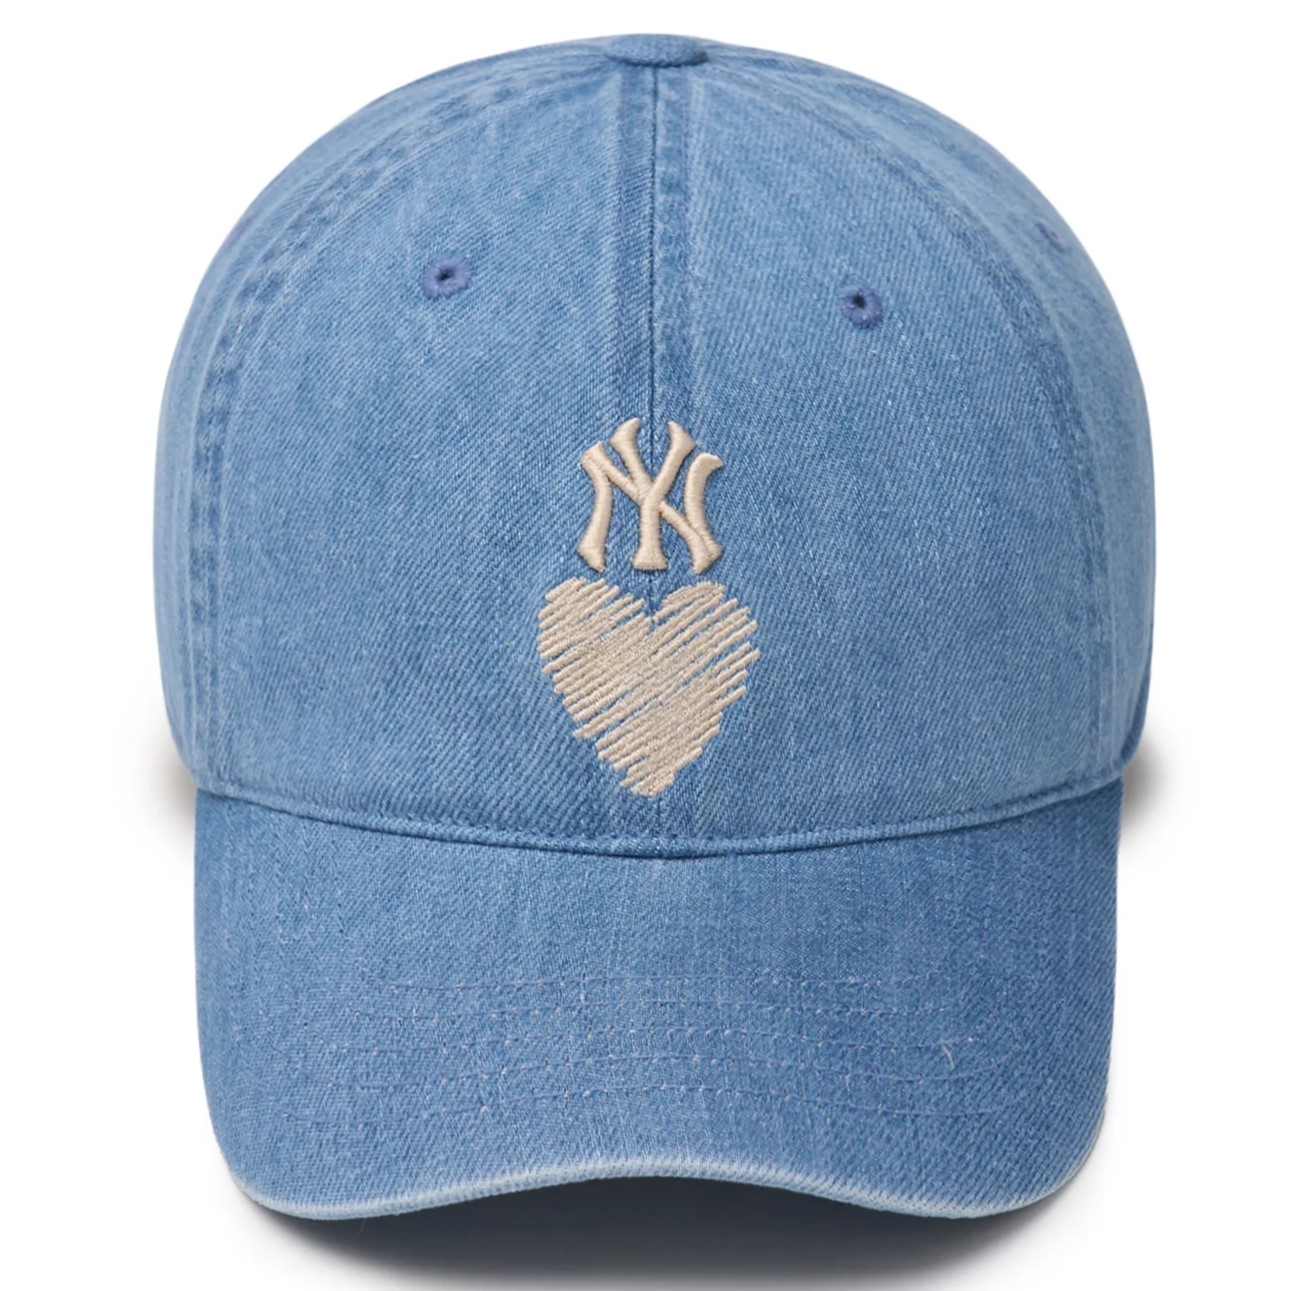 NÓN KẾT MLB NY BLUE DENIM HEART UNSTRUCTURED BALL CAP NEW YORK YANKEES 3ACPH024N-50BLL 8